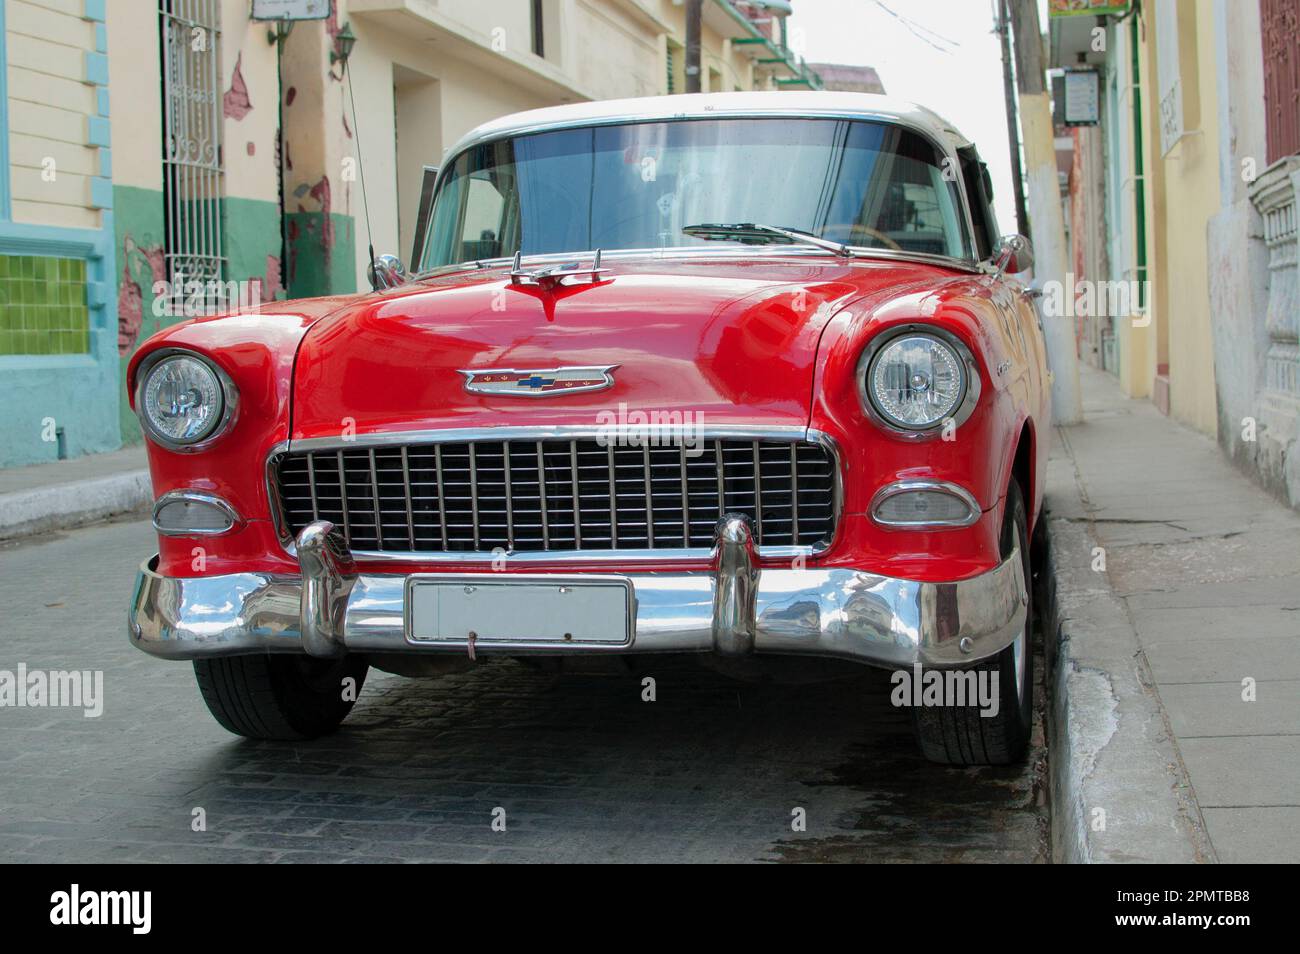 Auto d'epoca americana in una strada a Cuba, una reliquia cubana ben conservata dai tempi pre-rivoluzione Foto Stock